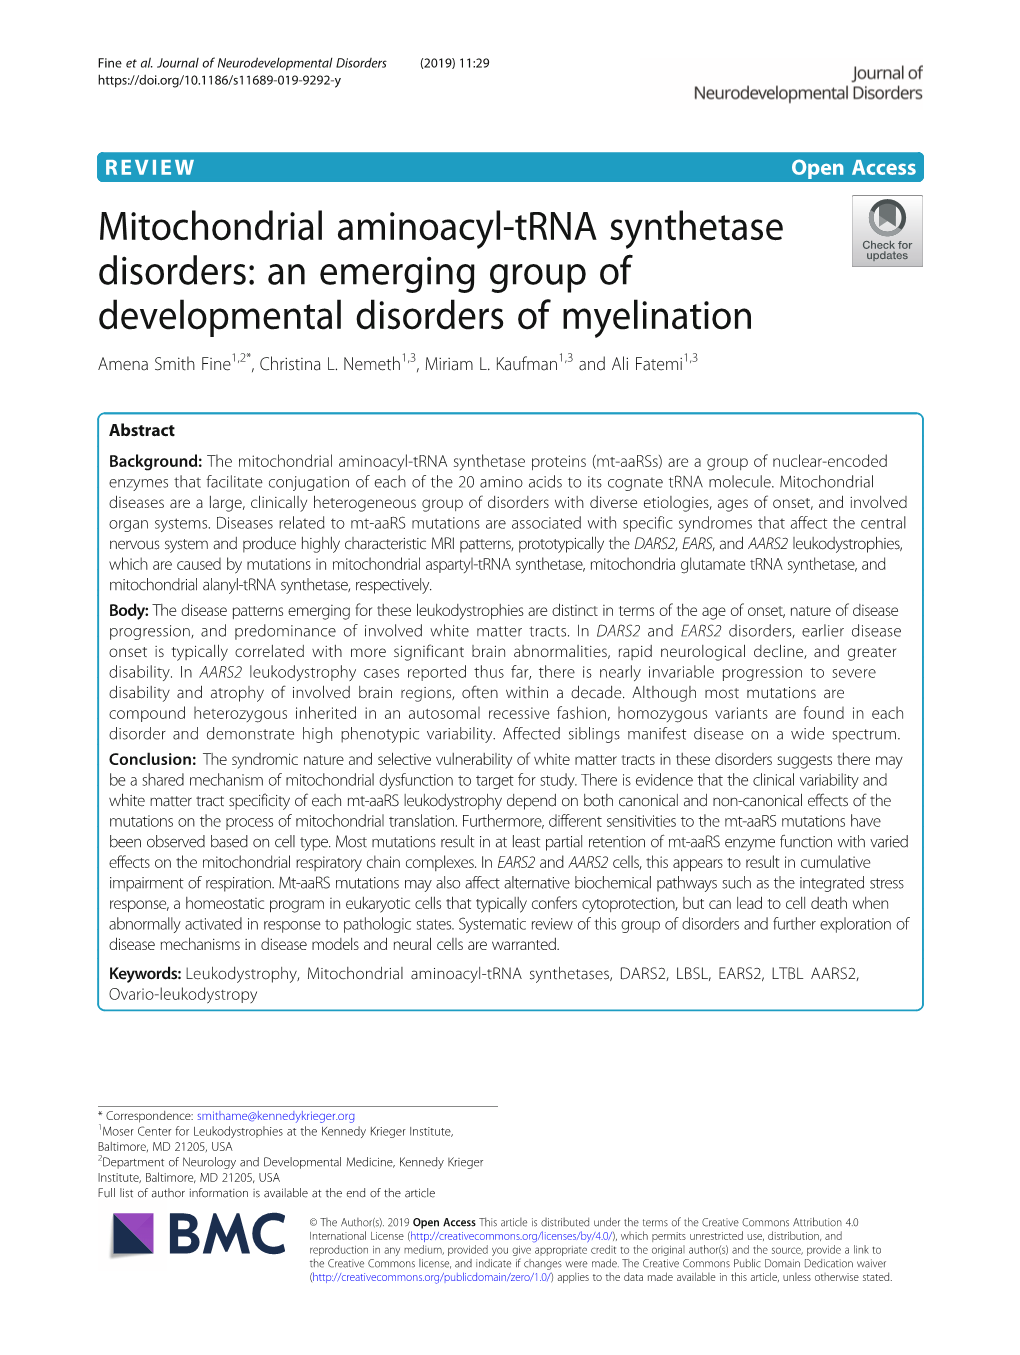 Mitochondrial Aminoacyl-Trna Synthetase Disorders: an Emerging Group of Developmental Disorders of Myelination Amena Smith Fine1,2*, Christina L